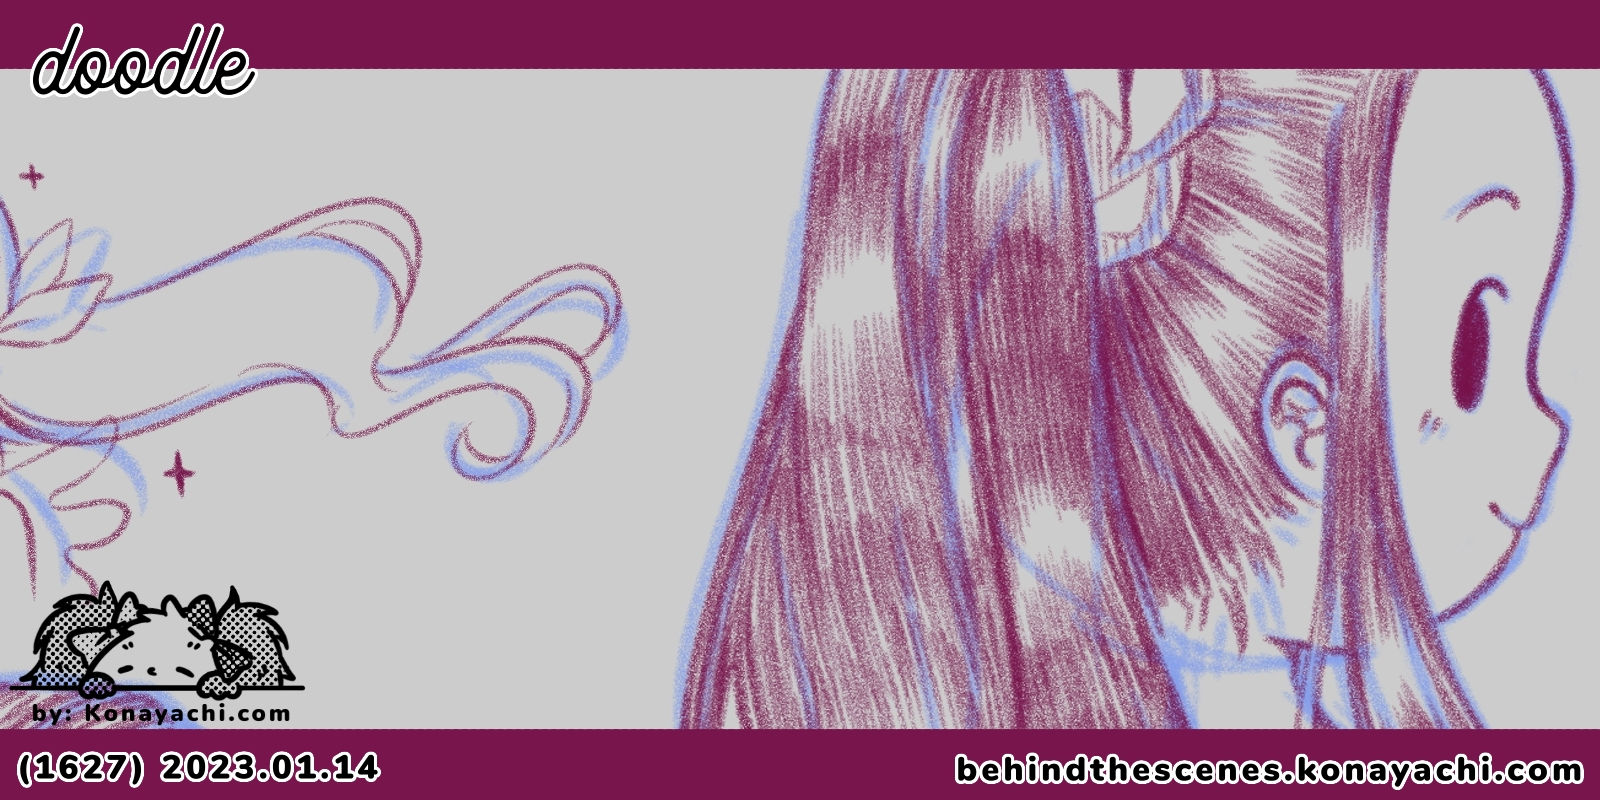 (1627) Ponytail / doodle